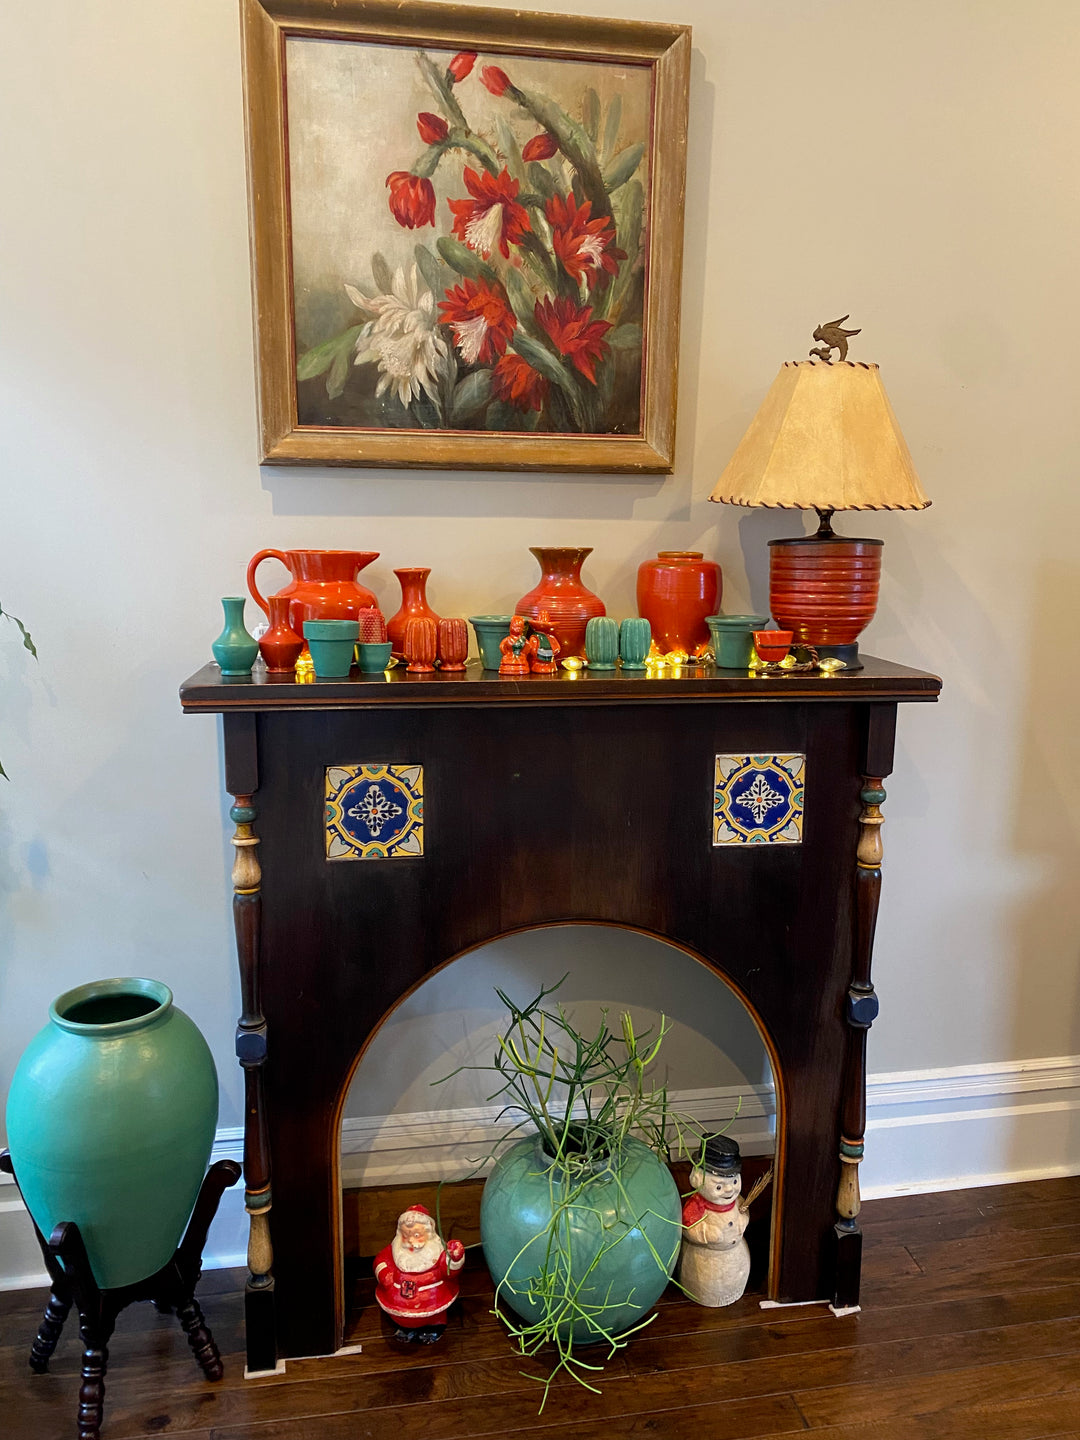 Coronado Fireplace Mantel with D & M Decorative Tiles